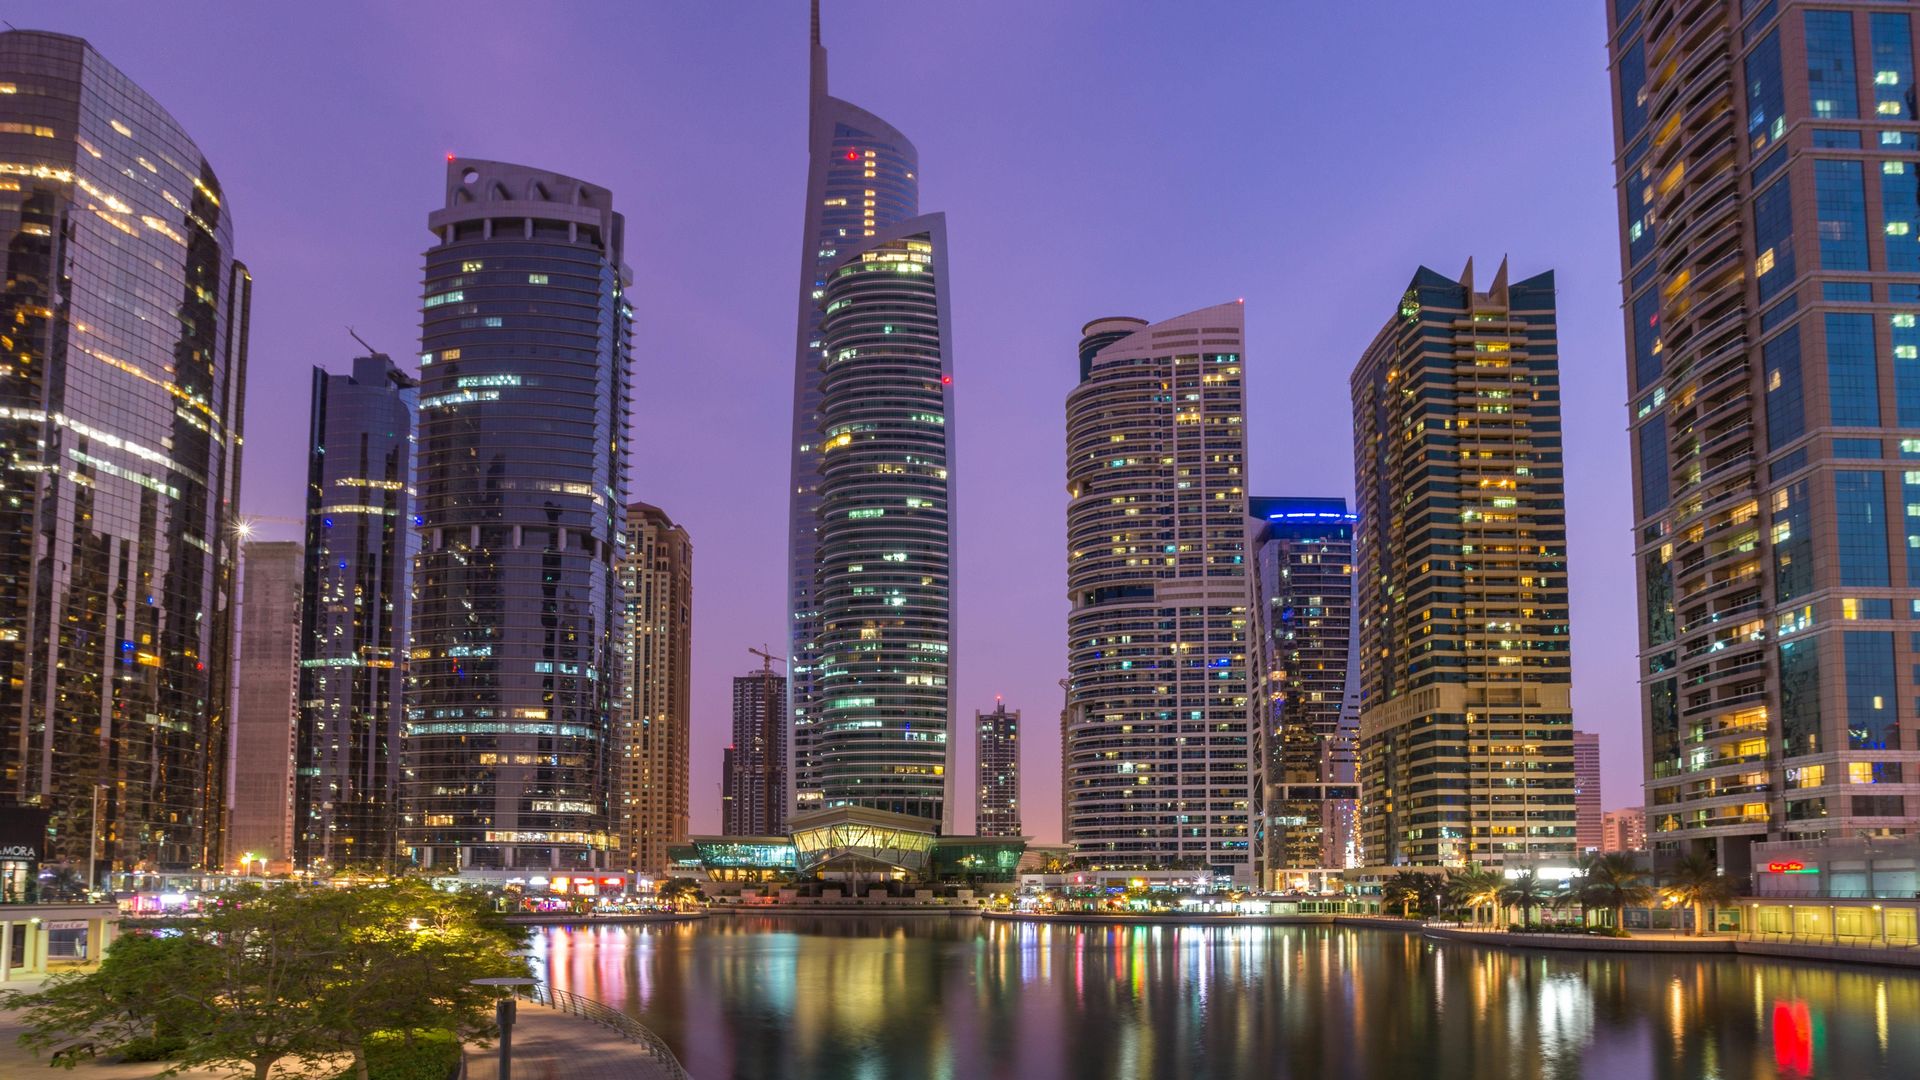 SO/ UPTOWN DUBAI HOTEL & RESIDENCES by Six Construct in Jumeirah Lake Towers, Dubai, UAE - 2